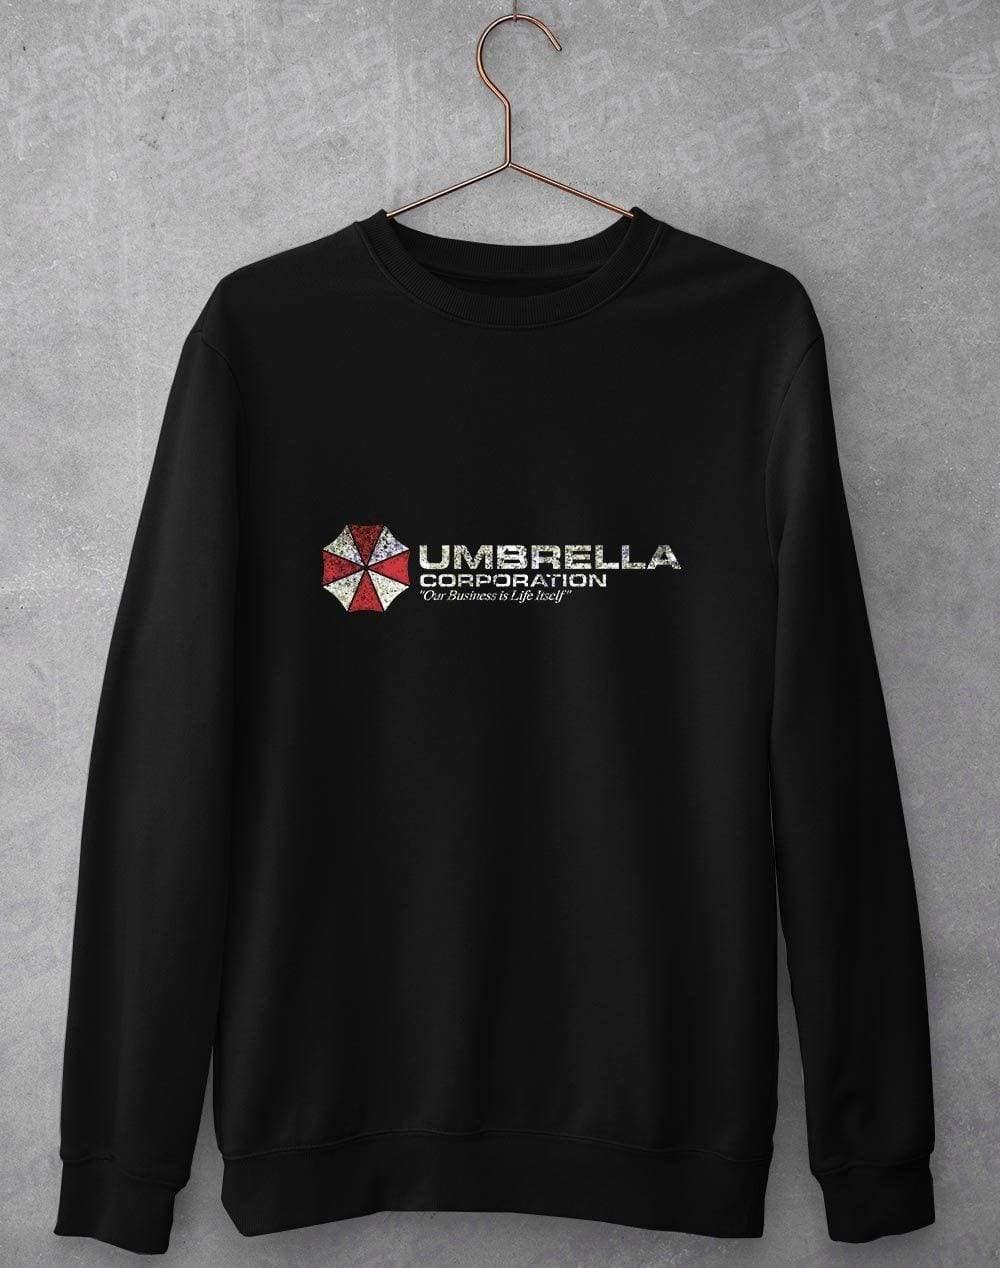 Umbrella Corporation Sweatshirt